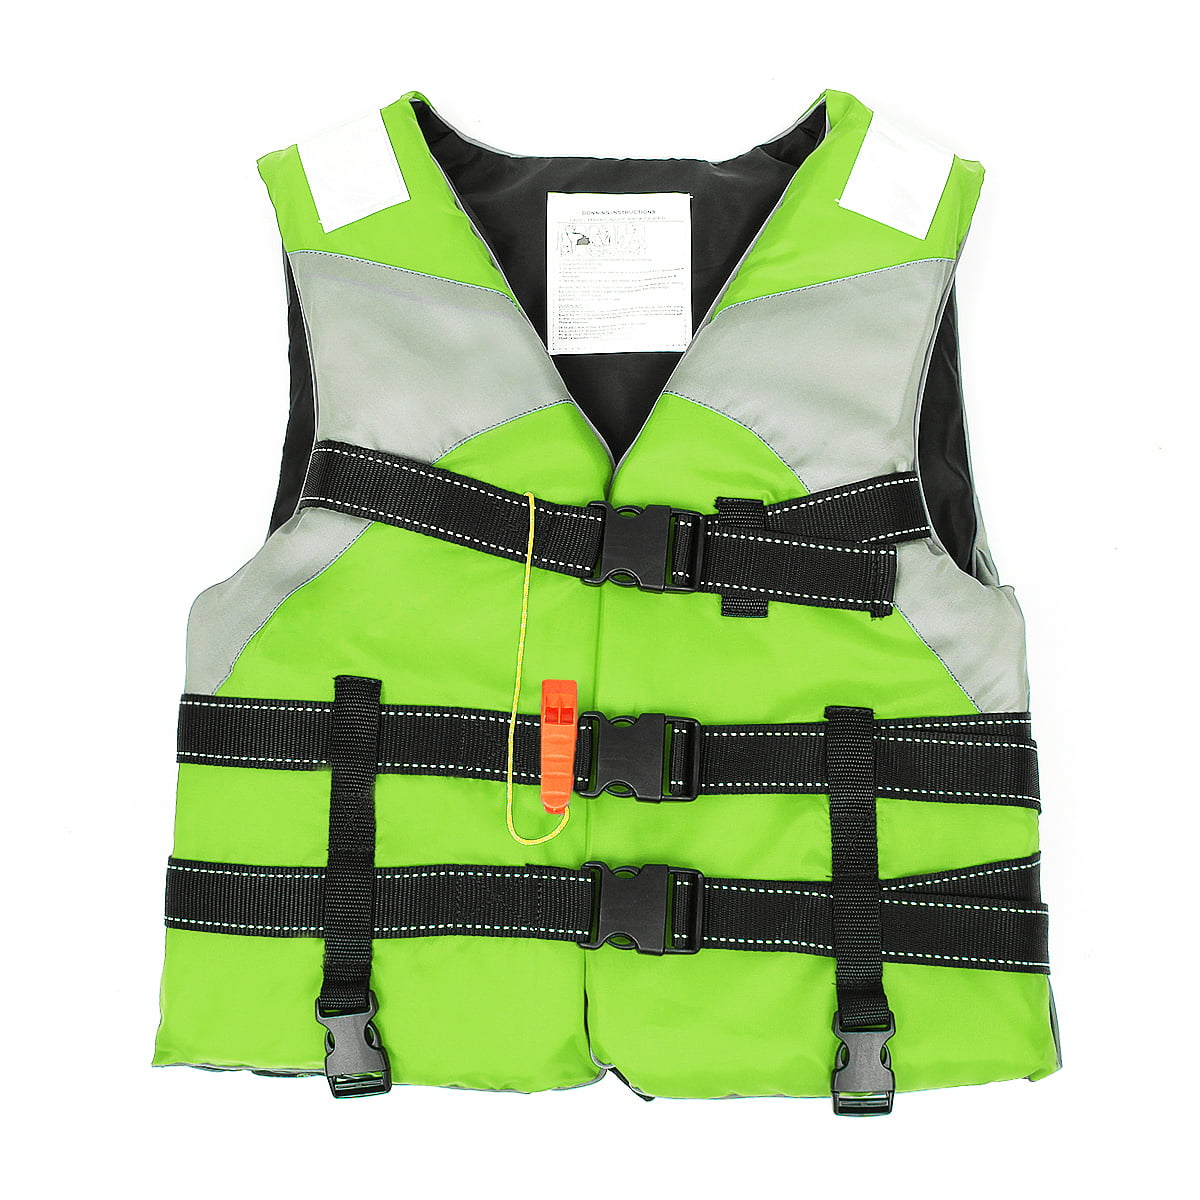 Life Jackets Adults Kayaking S Unisex Snorkel Vest with Whistle Buoyancy Vest Aid Outdoor Reflective Adjustable Buoyancy Vest Jacket Safety Waterproof Floating EPE Jacket Life Saving Vest